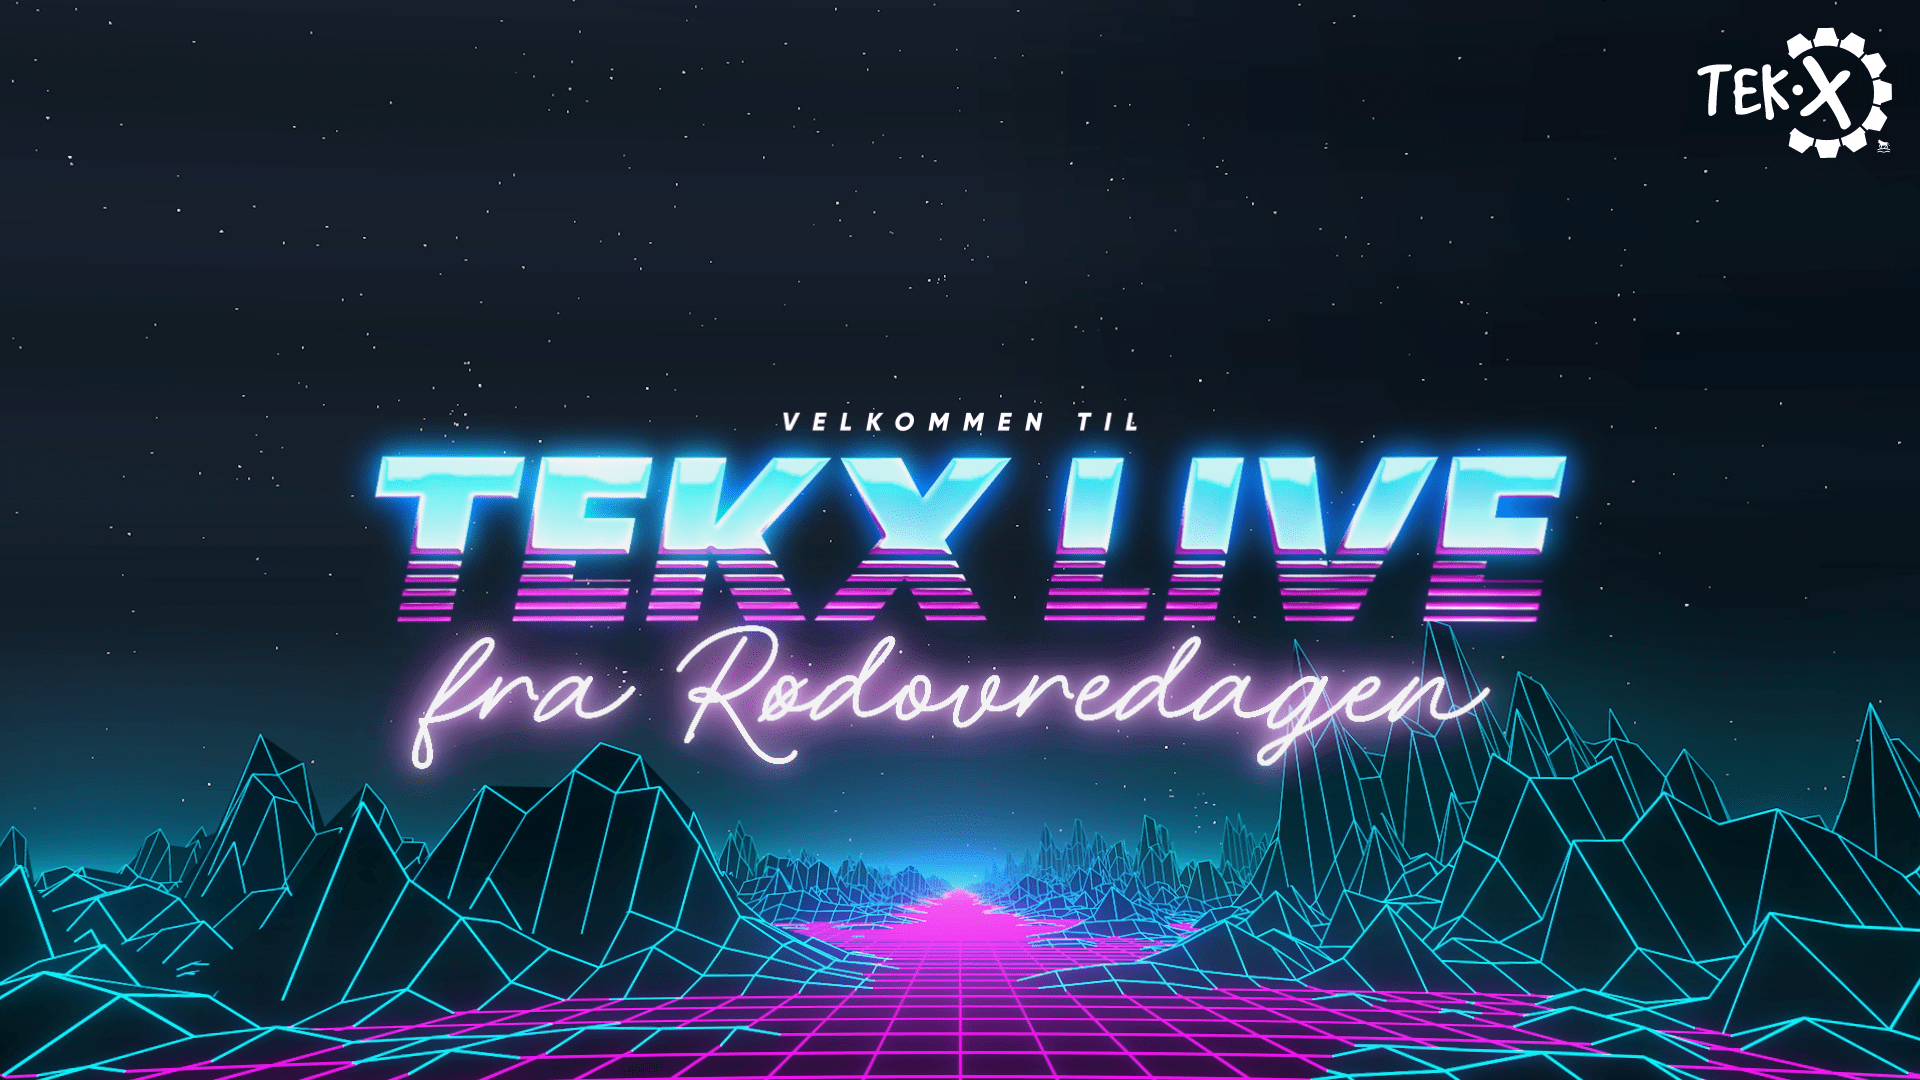 TekX Live video fra Rødovredagen